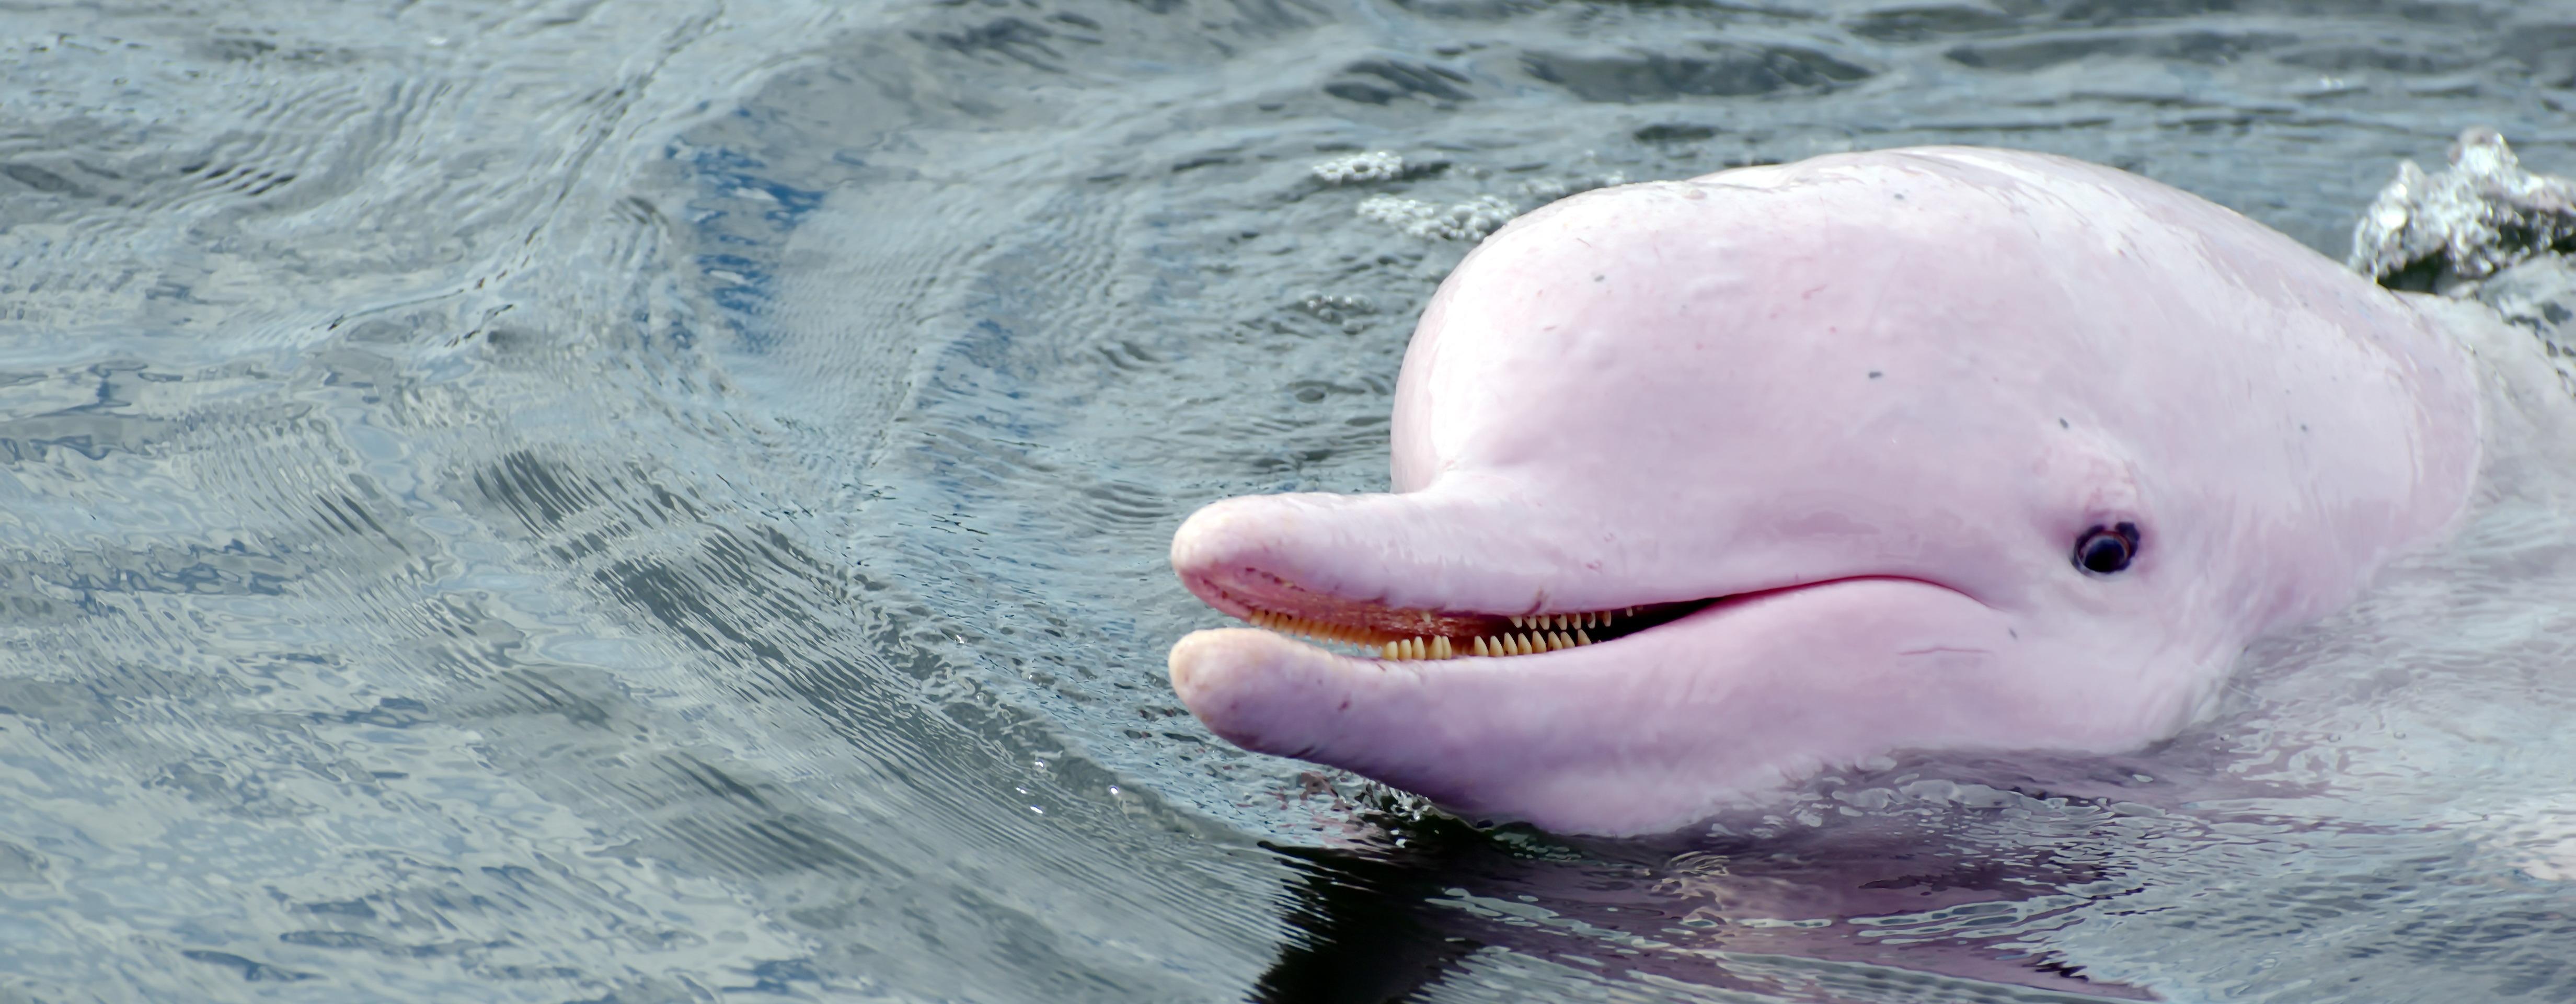 Pink Dolphin-Watching Cruise in Hong Kong